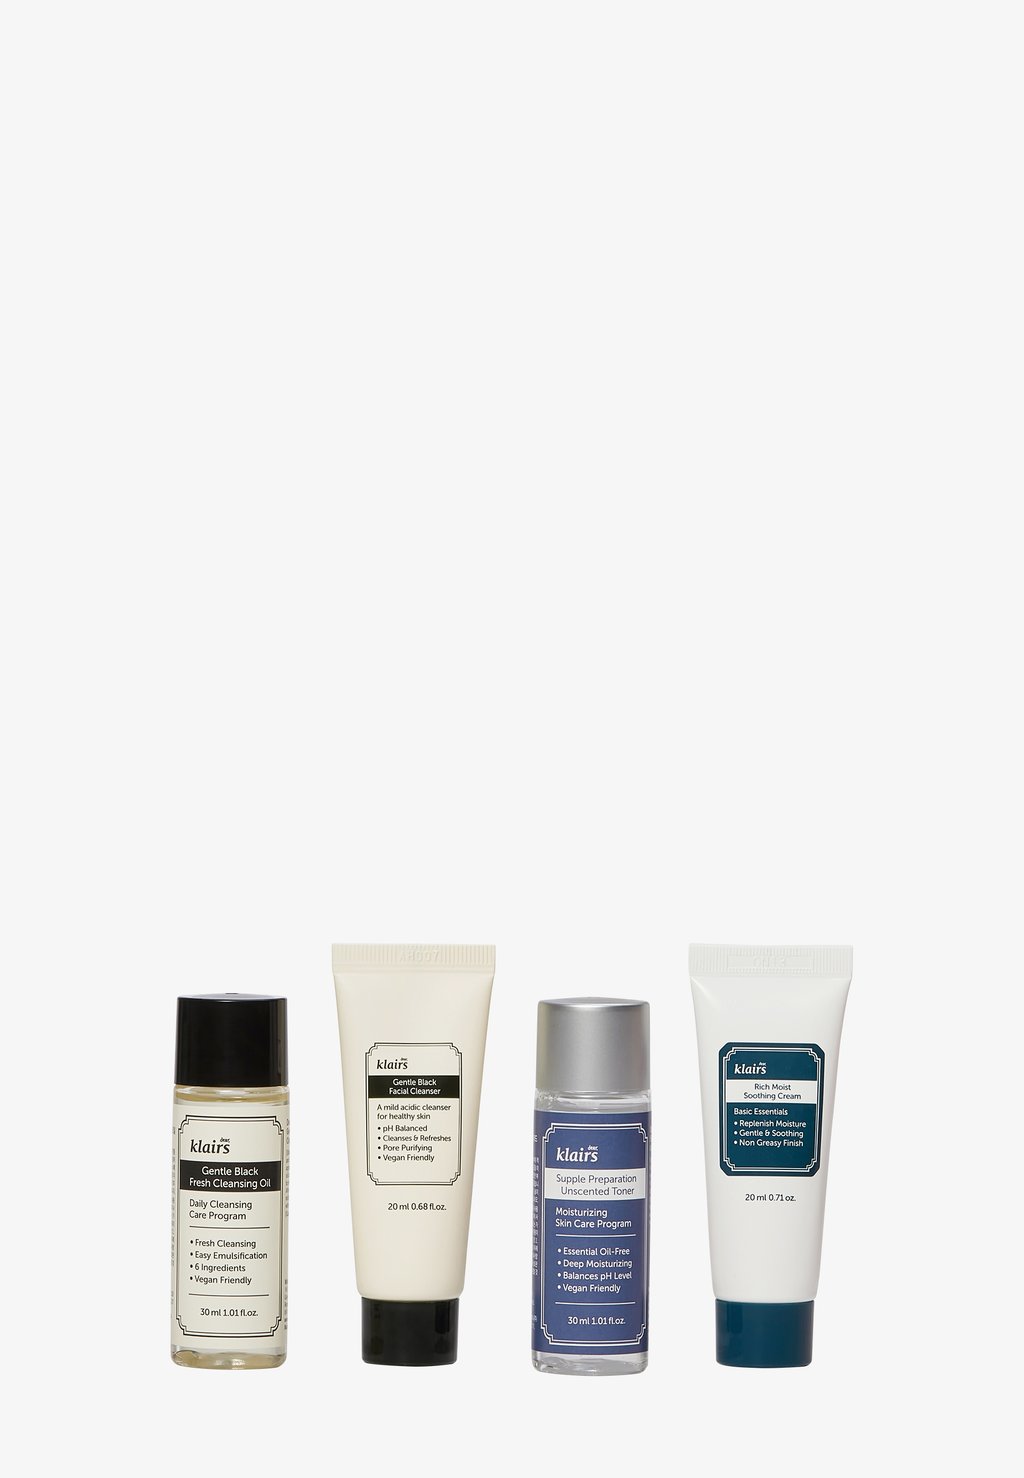 Набор для ухода за кожей Skincare Trial Kit klairs набор для ухода за чувствительной кожей cosrx pure fit trial kit 1 шт